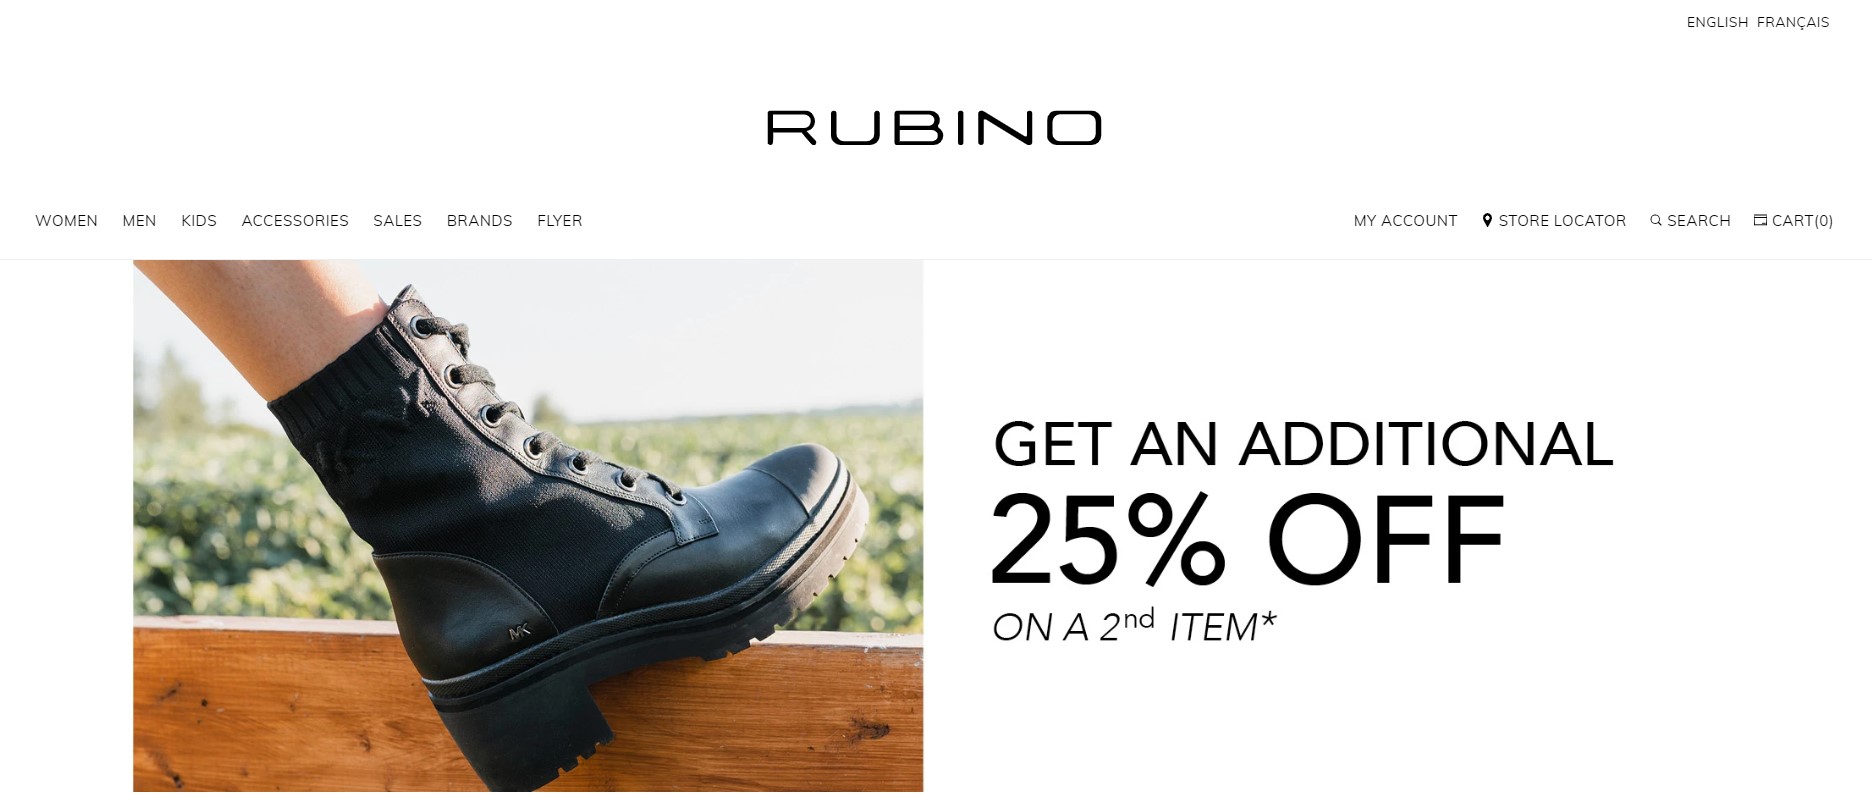 rubino shoe store in quebec